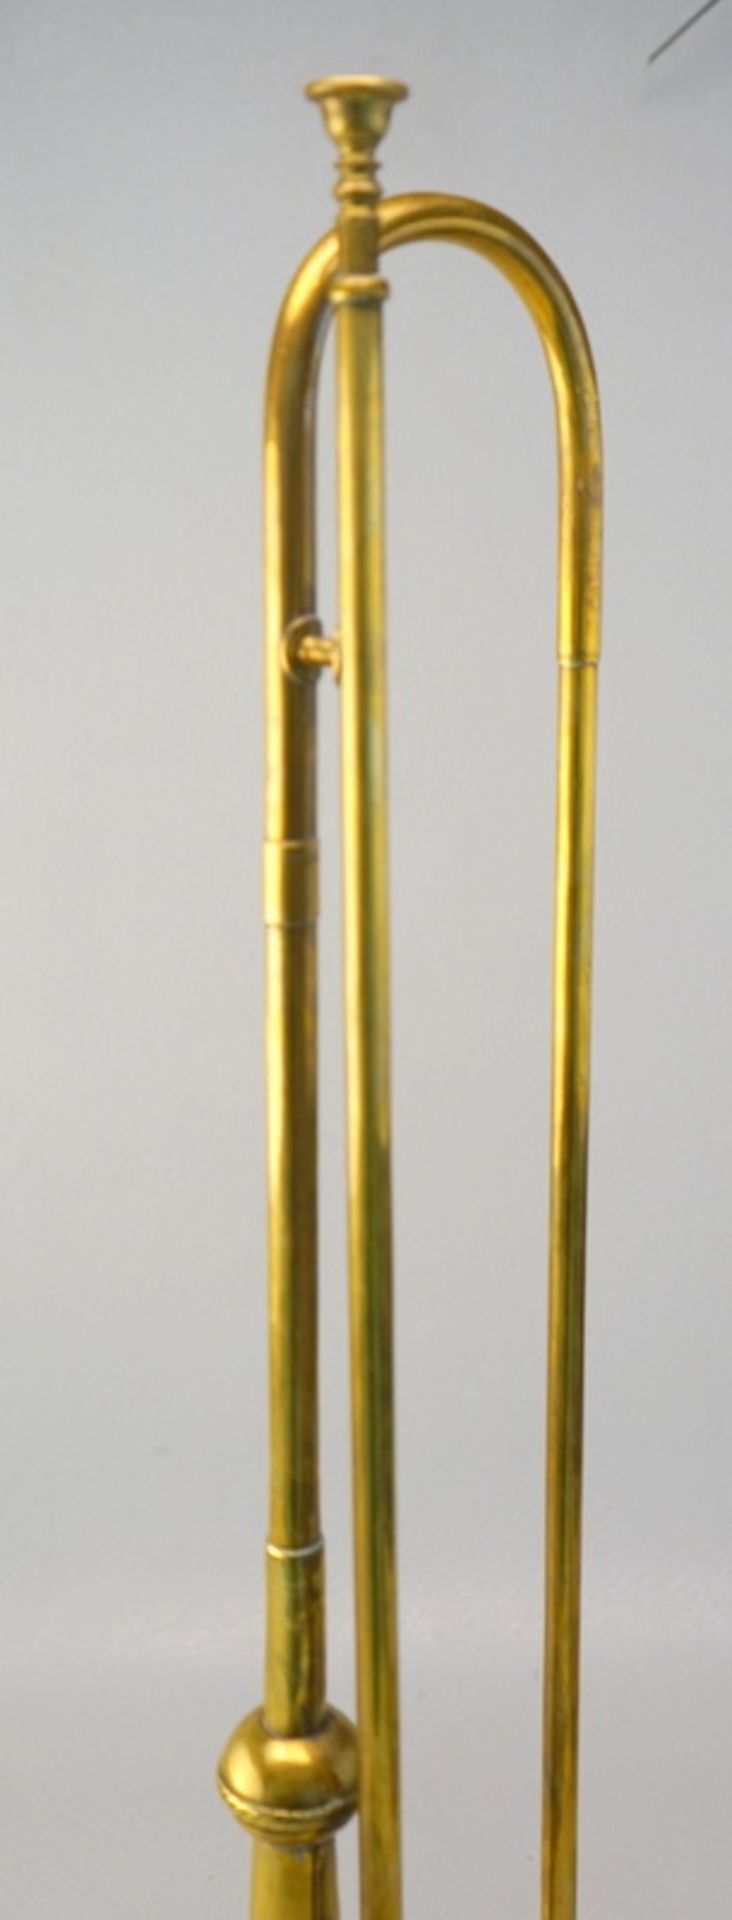 Saurle, Michael: Klassische Trompete von Michael Saurle, München ca. 1820 - Image 2 of 3